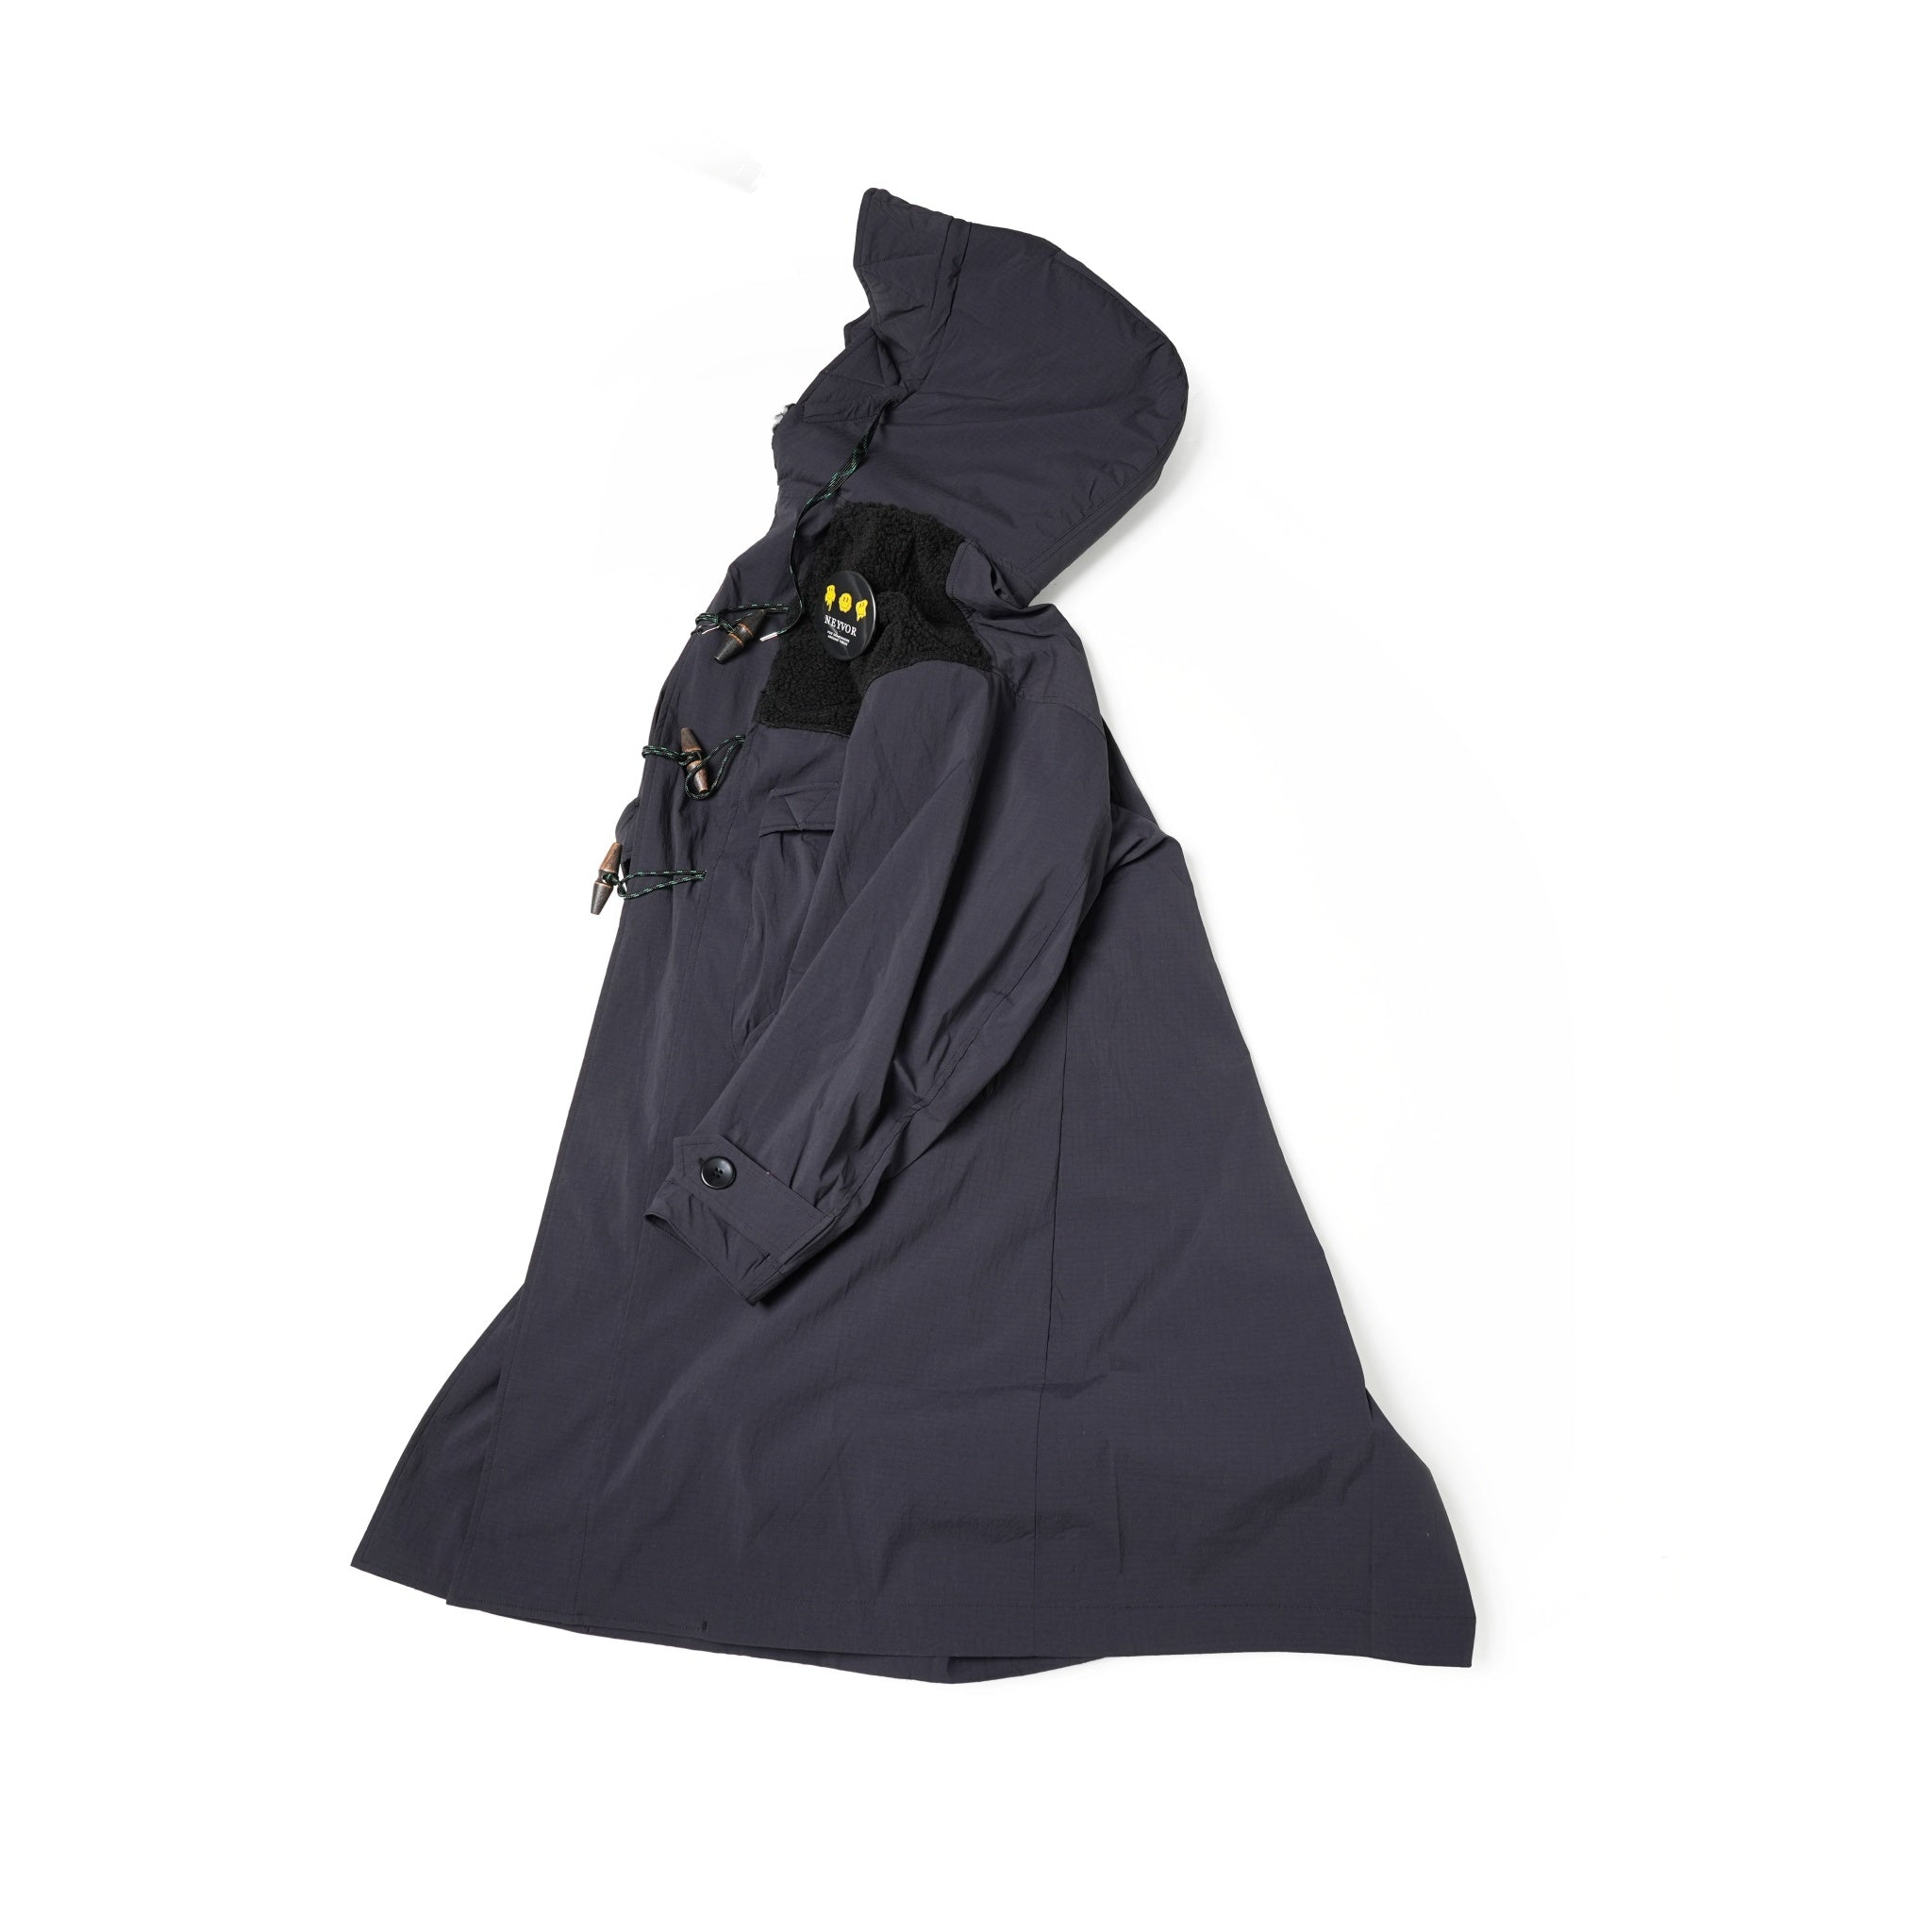 No:NV23AW-02 | Name:CORDURA® Outdoor Duffle Coat | Color:Black